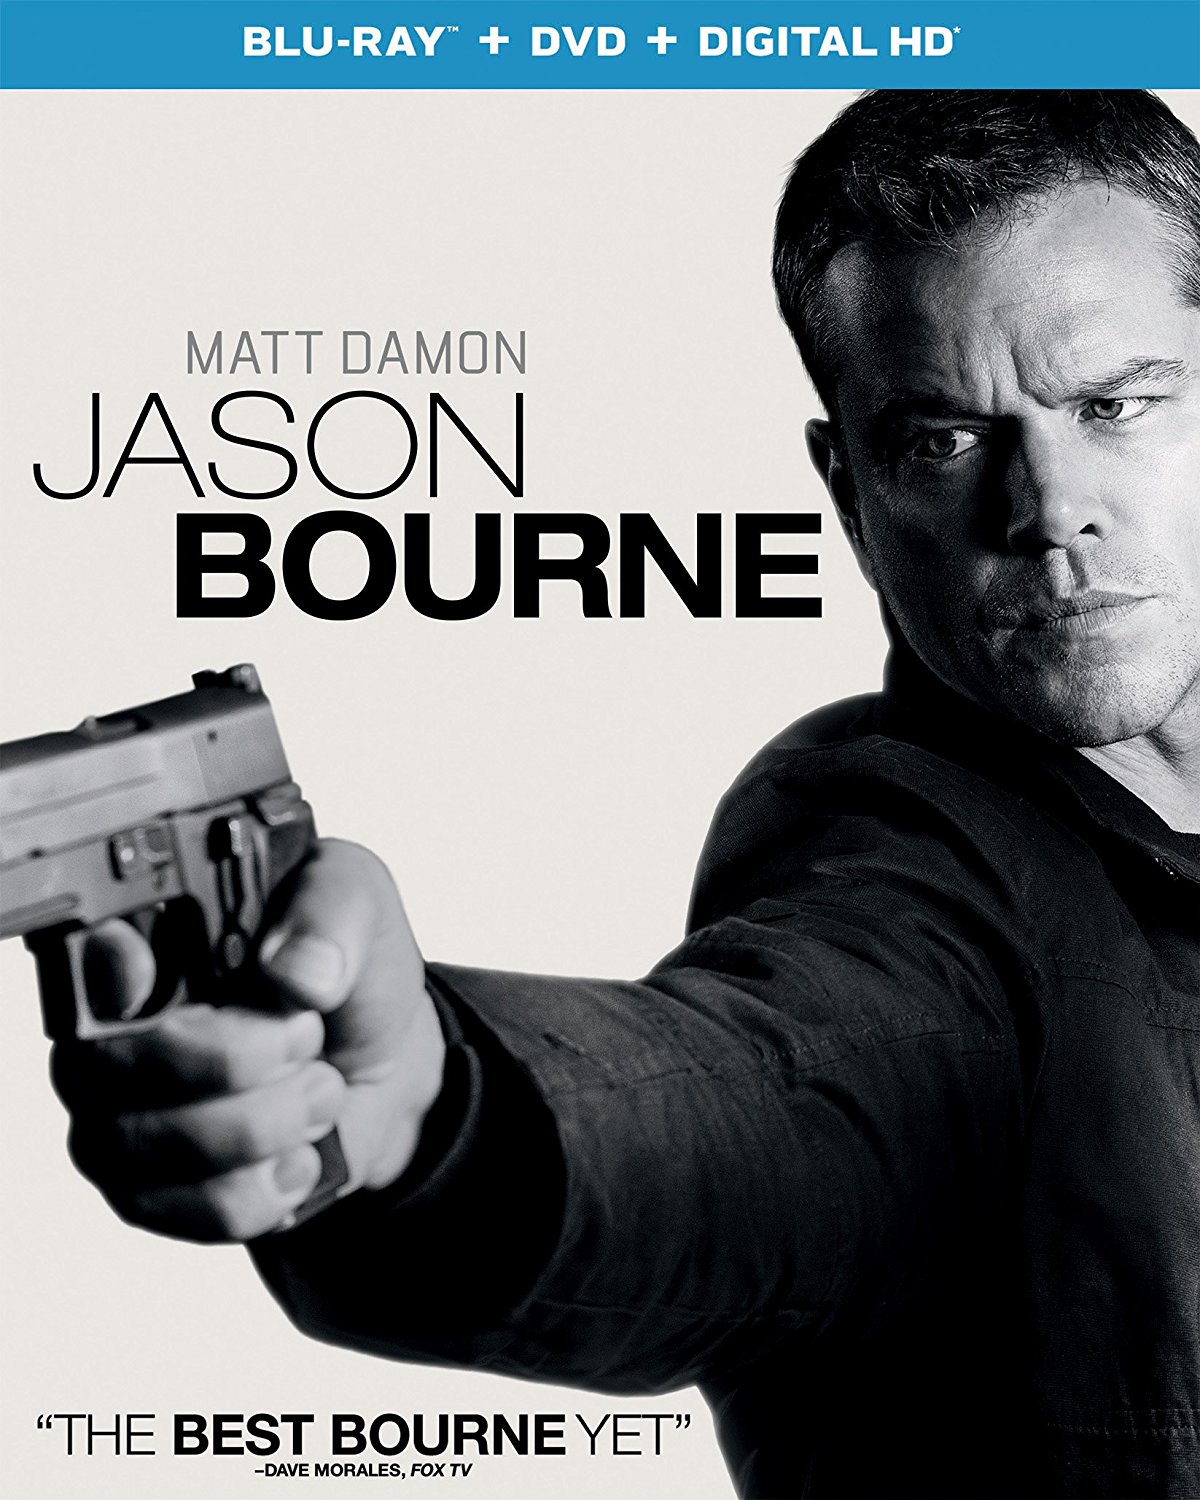 Preorder Jason Bourne on Blu-ray + DVD + Digital HD – Just $19.96!